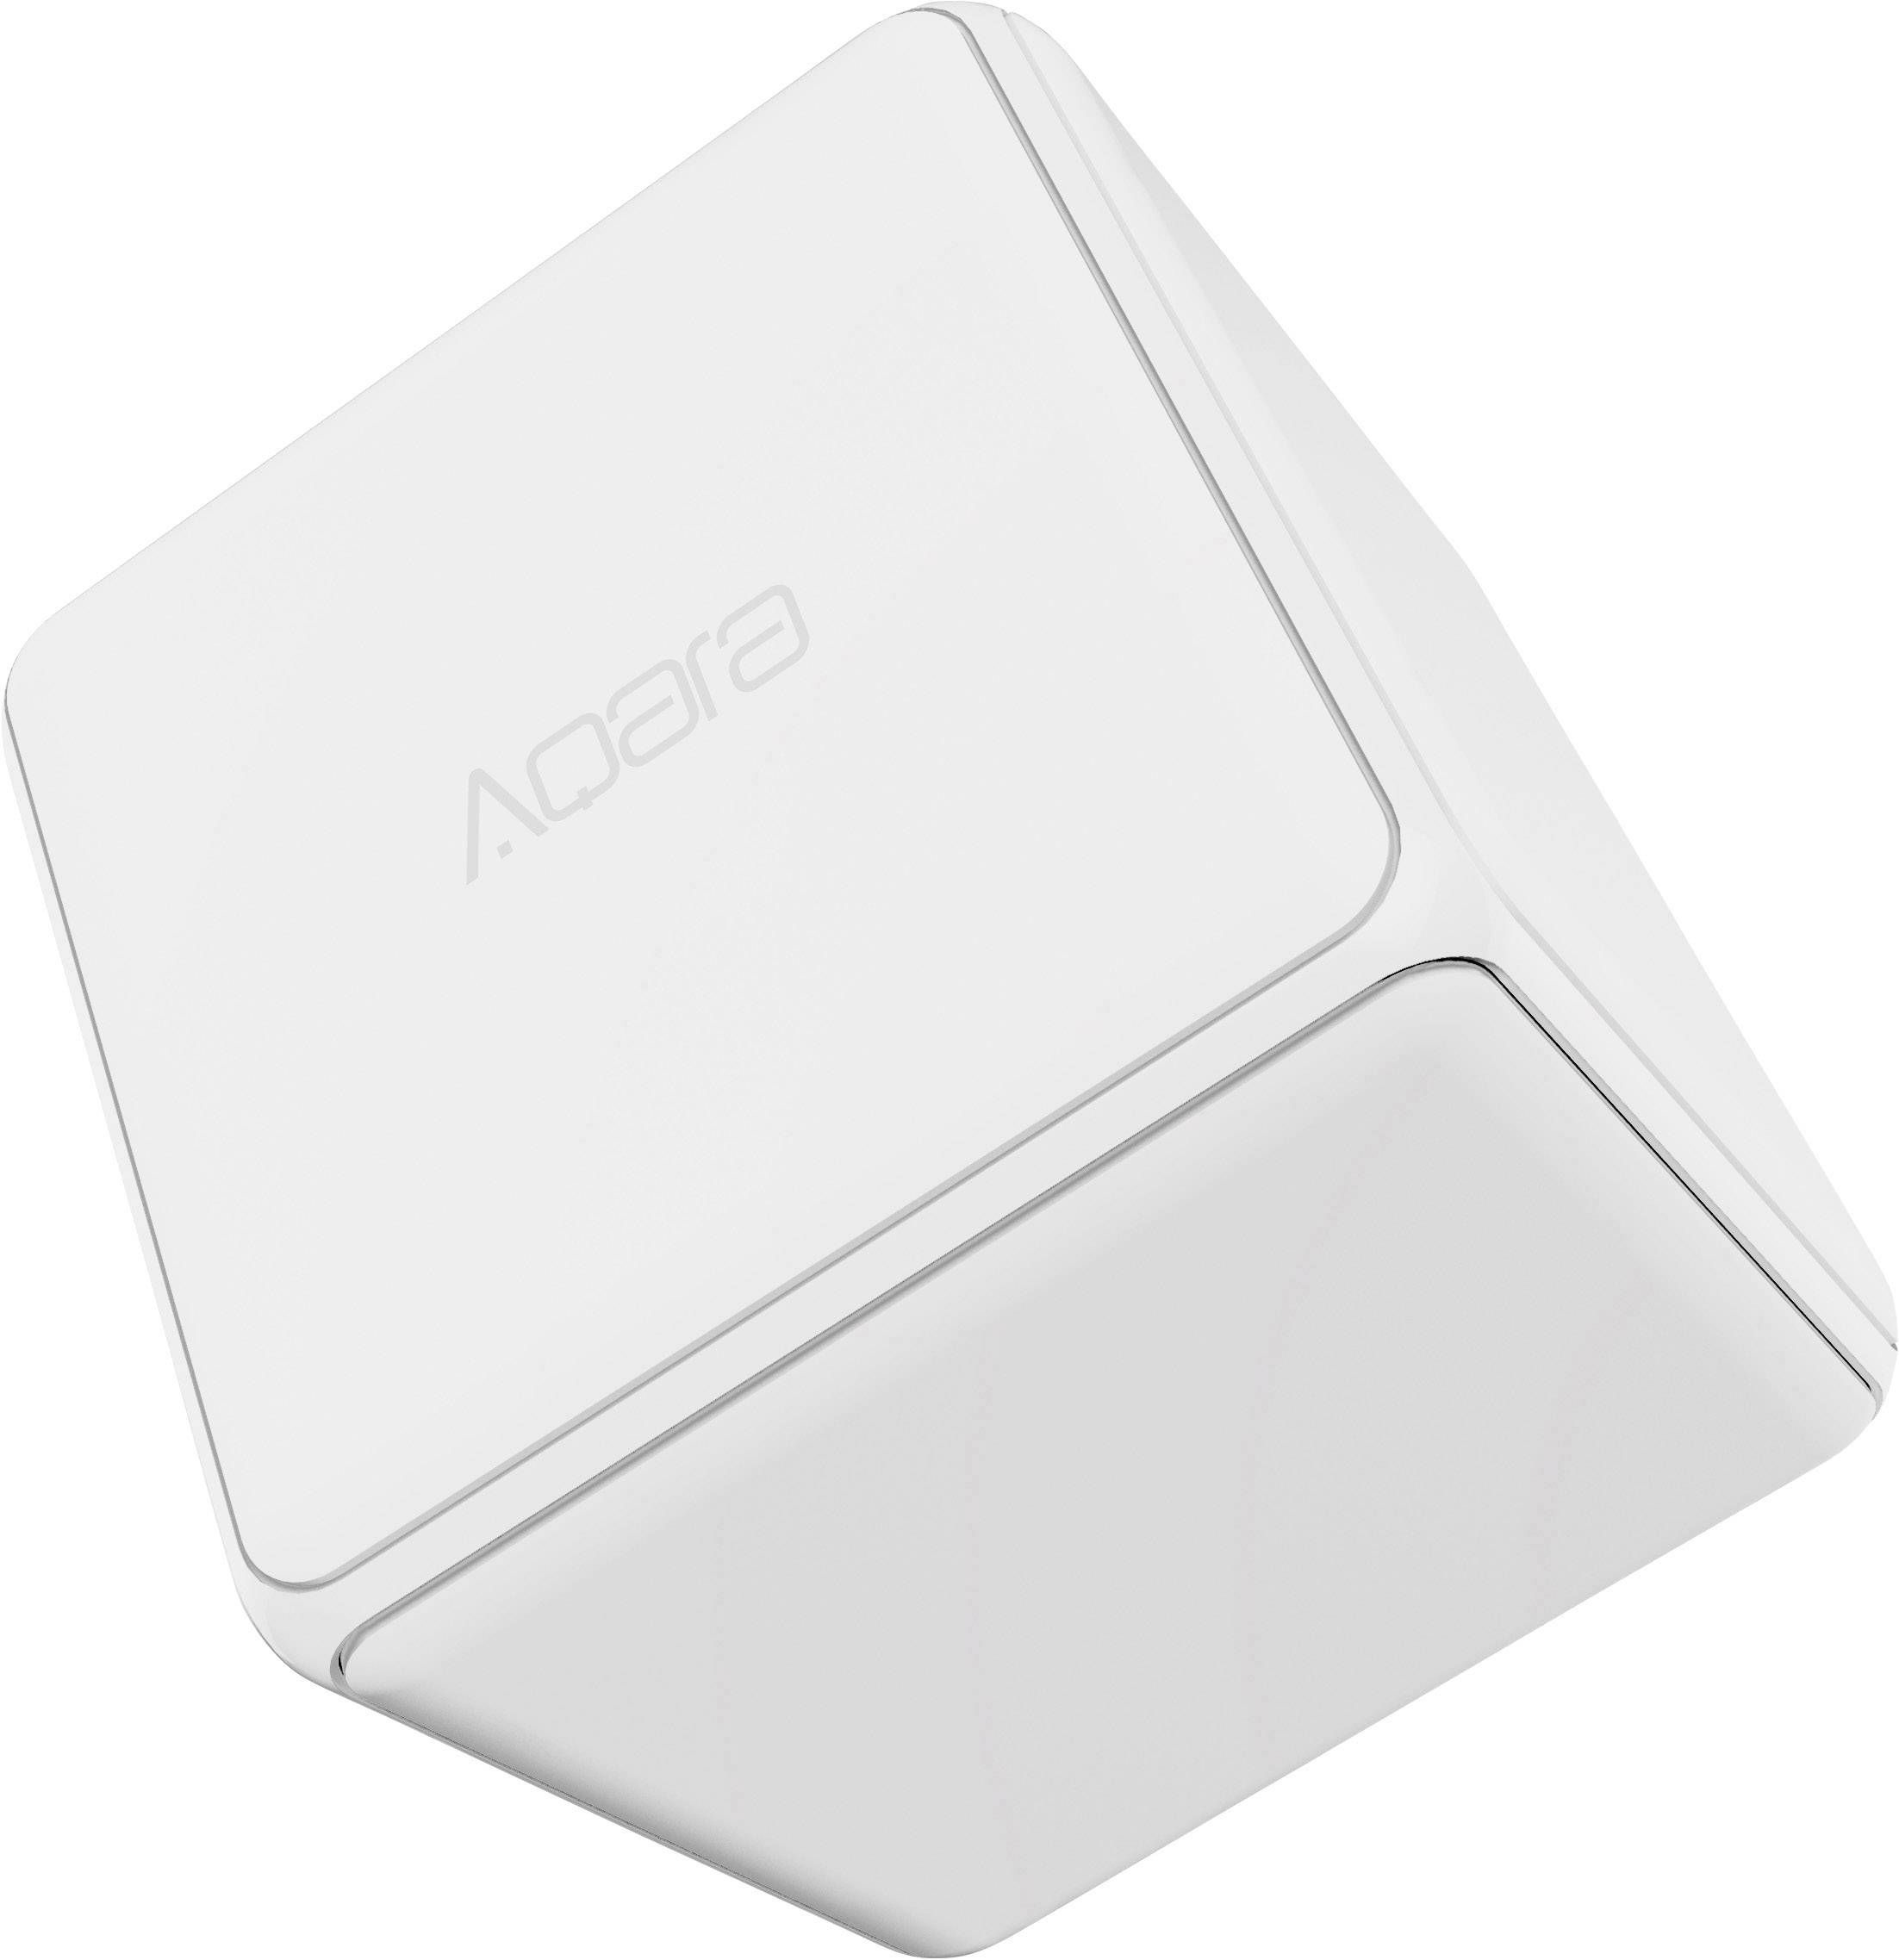 Ovládací kostka Xiaomi Aqara Cube - bílá od domeshop.cz